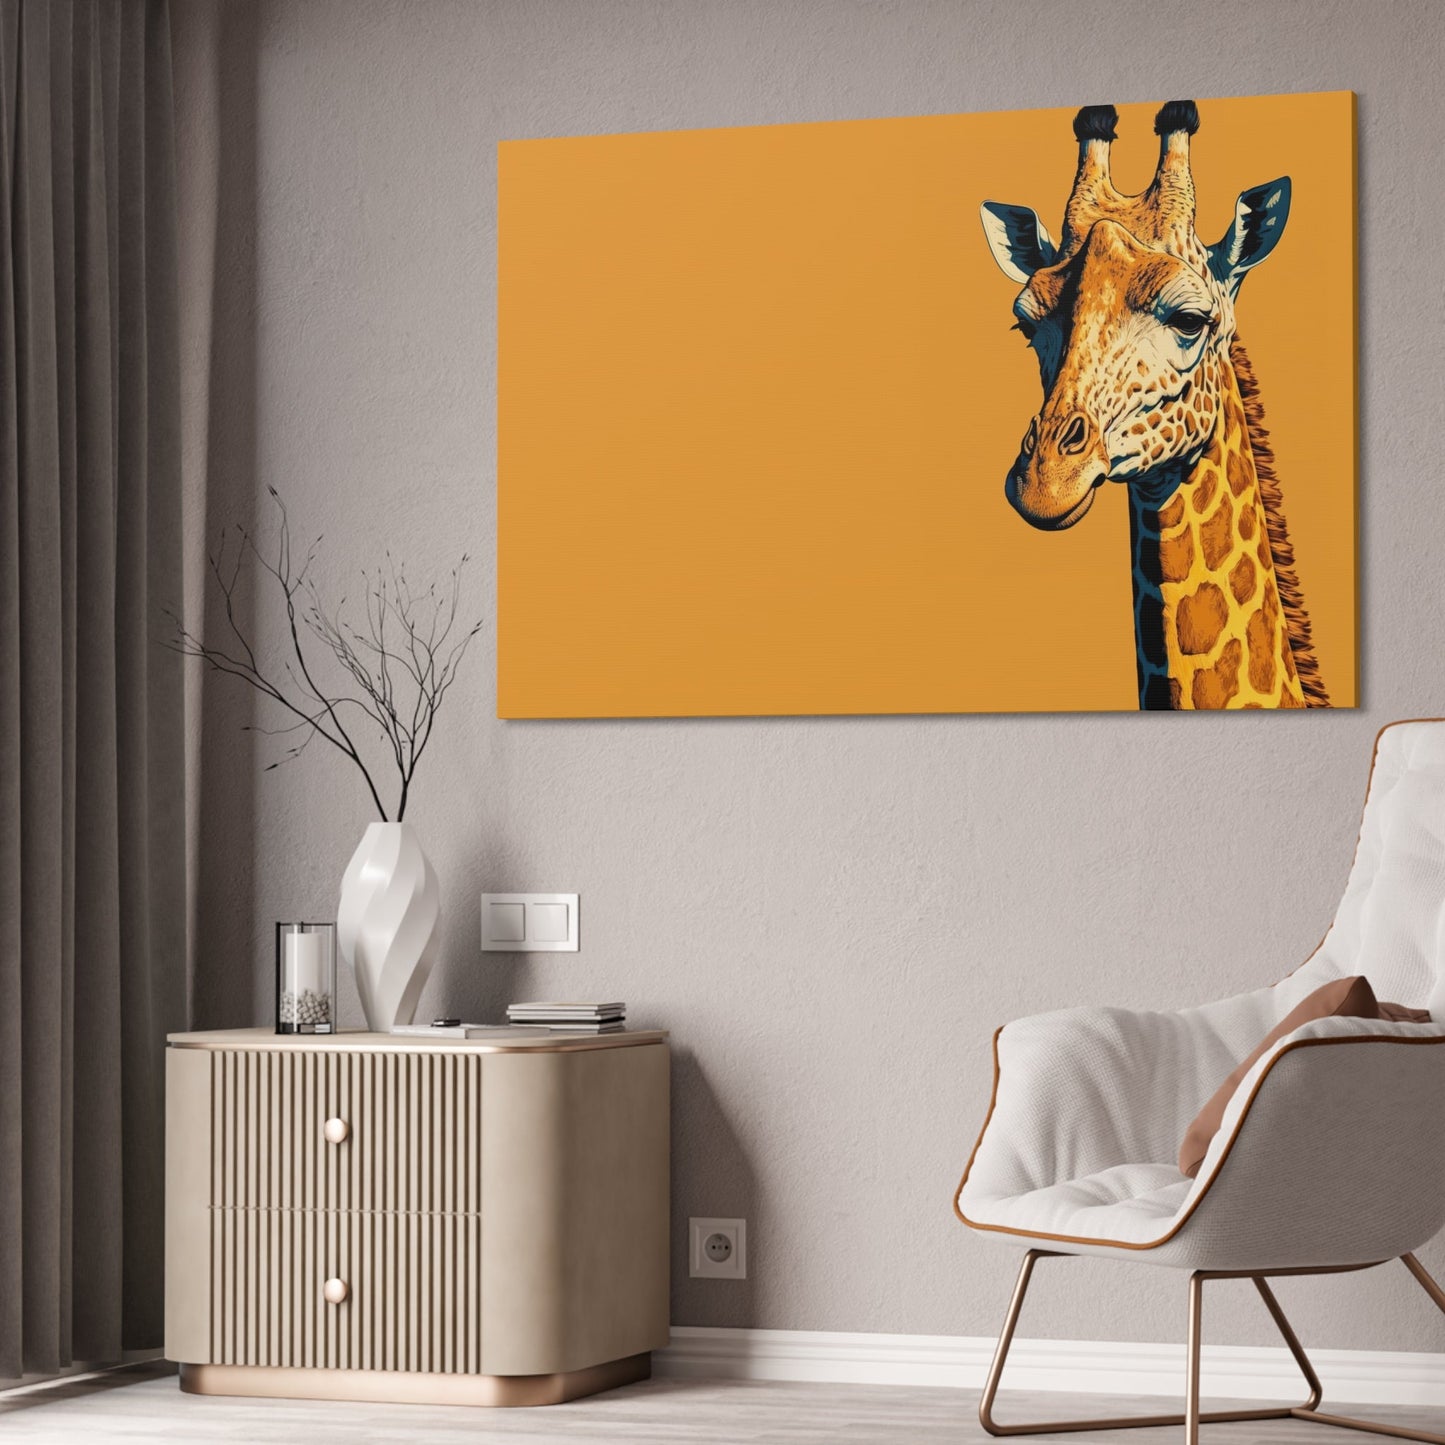 Tall and Proud: Beautiful Giraffe Art on a Framed Canvas & Poster